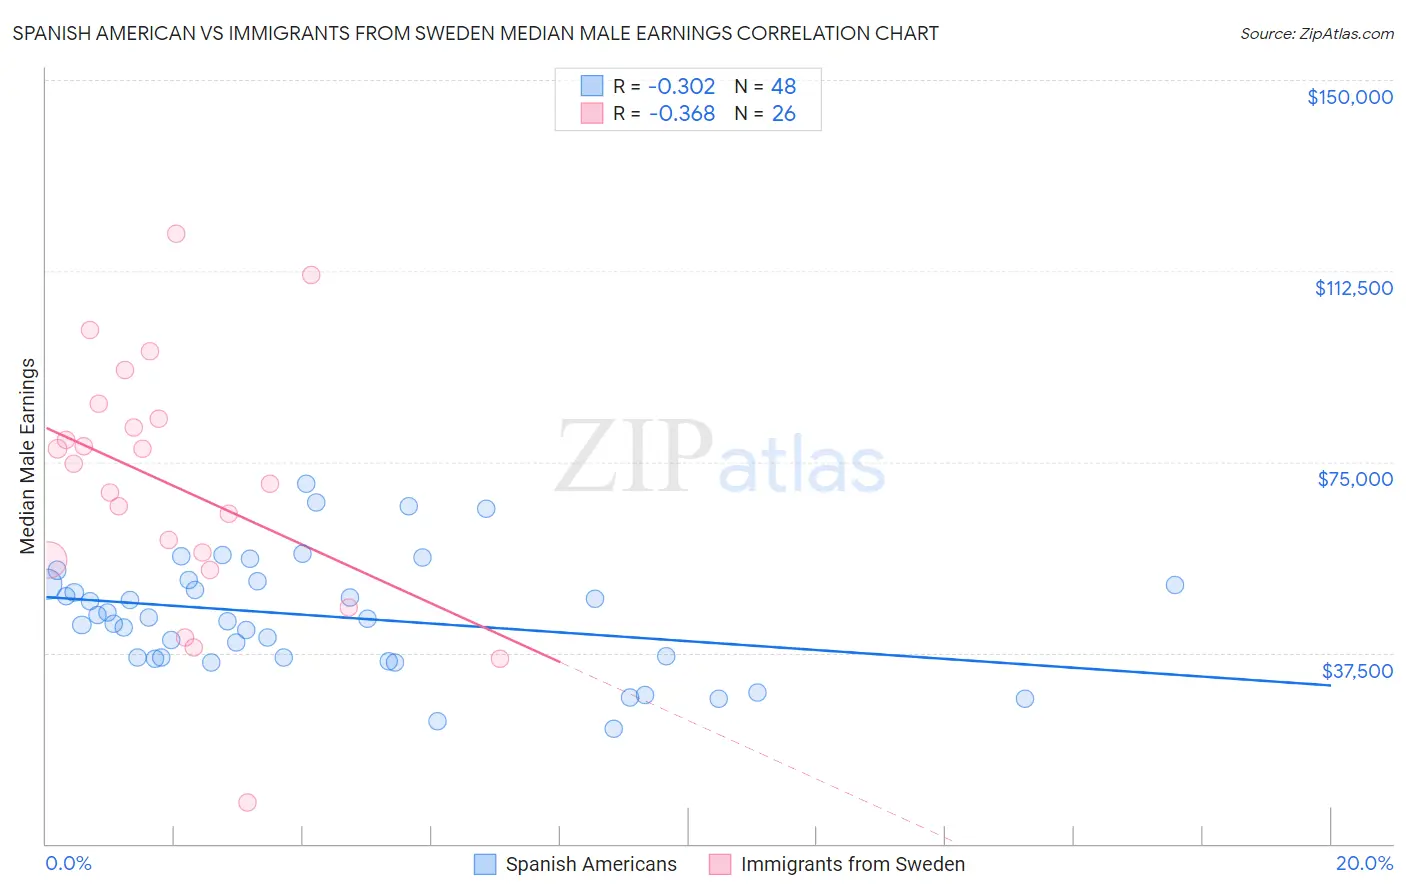 Spanish American vs Immigrants from Sweden Median Male Earnings